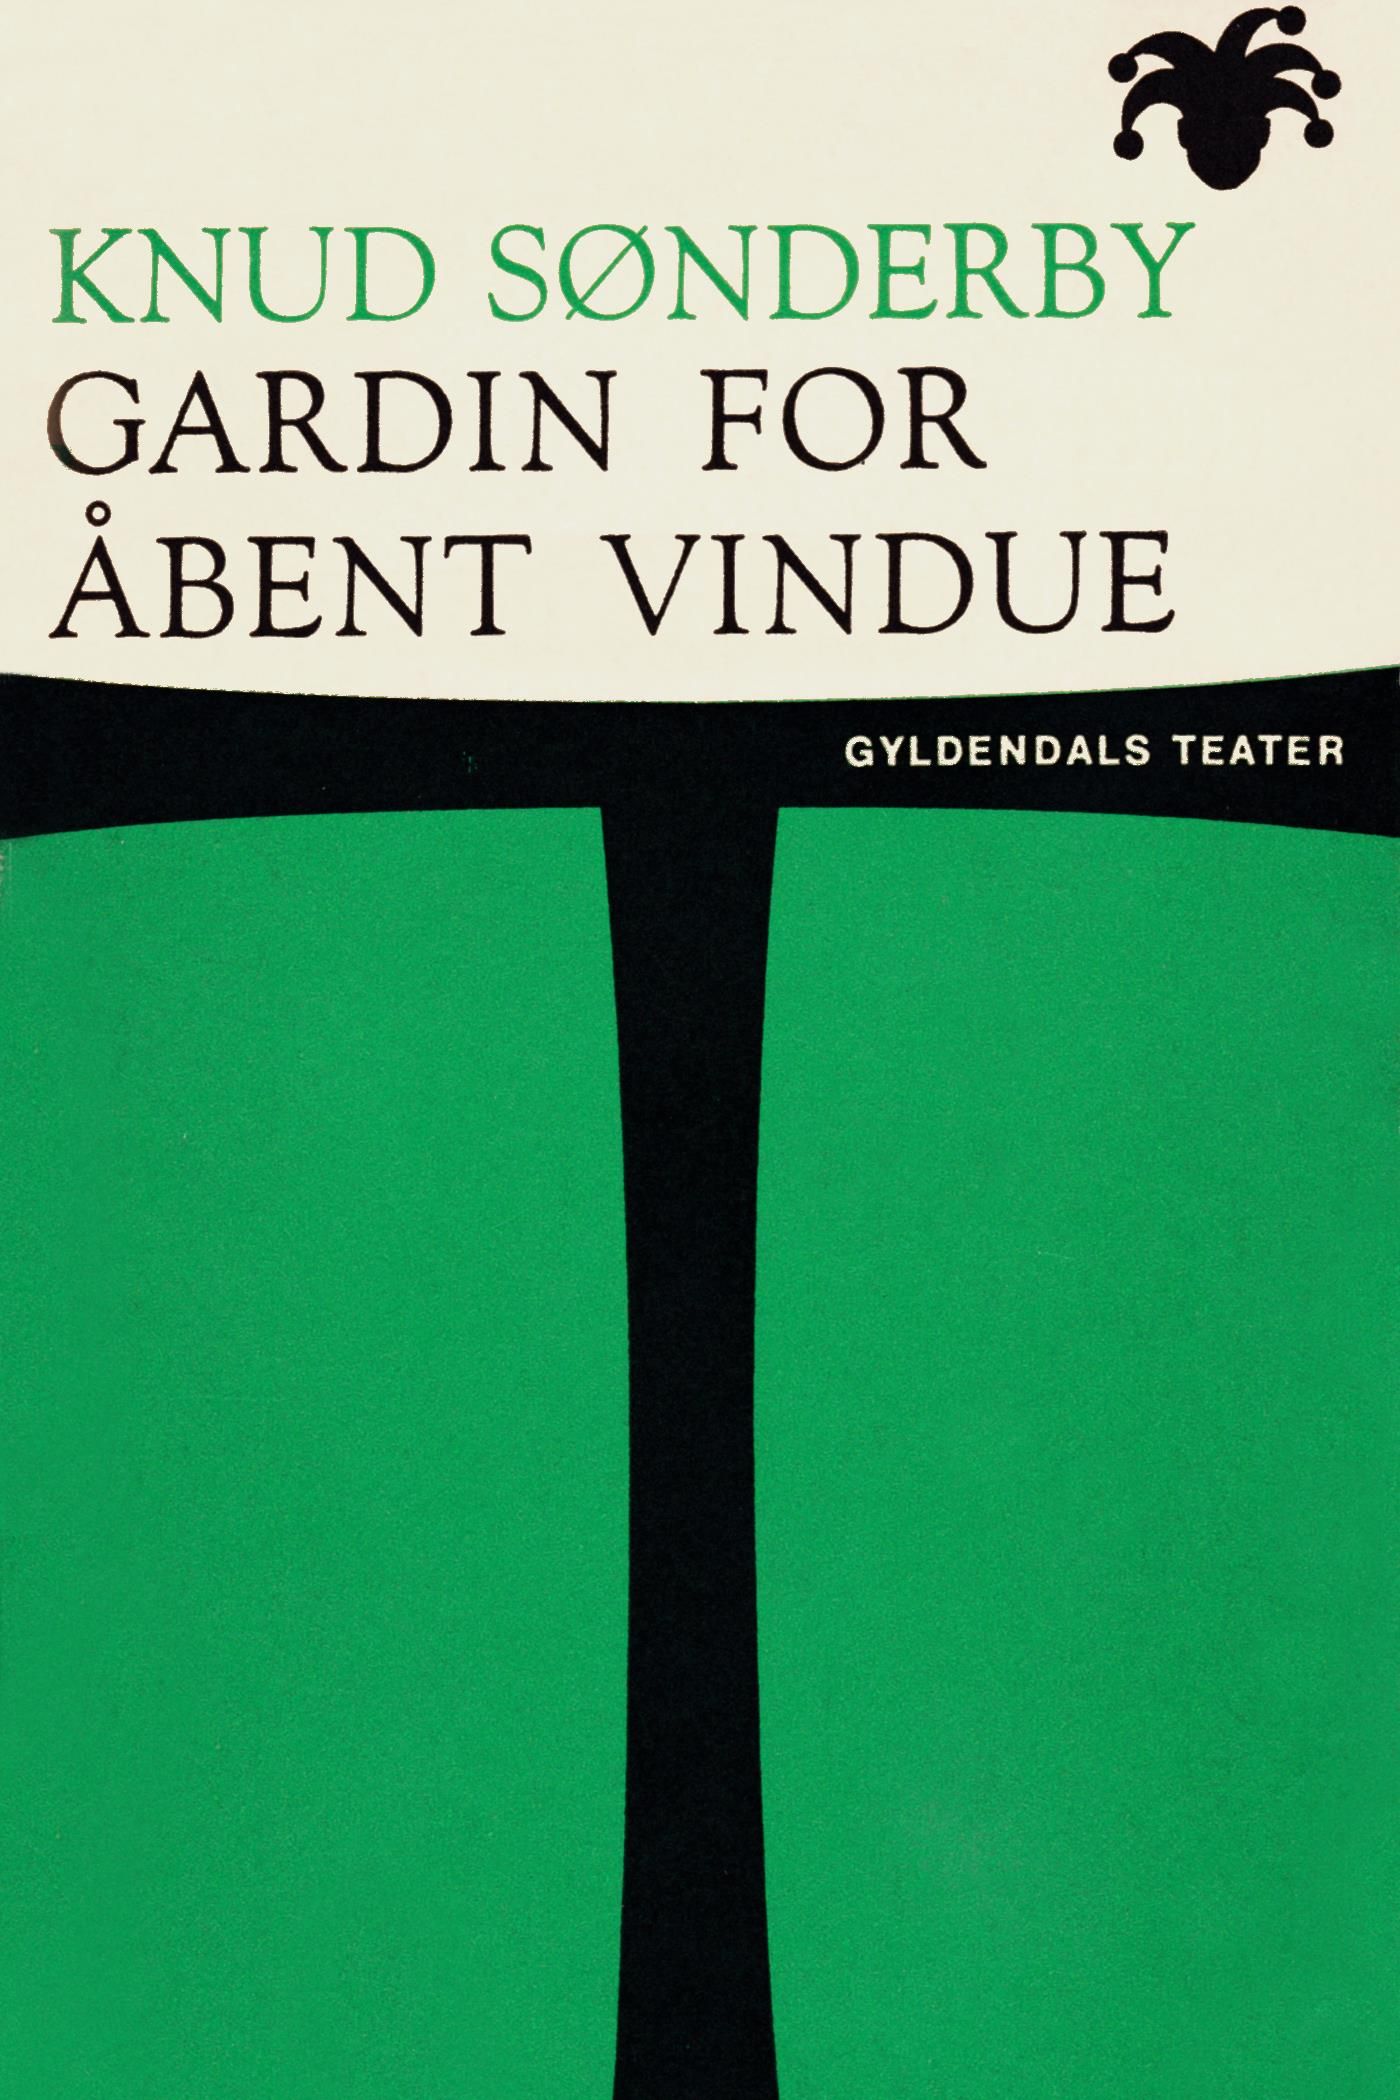 Gardin for åbent vindue, eBook by Knud Sønderby